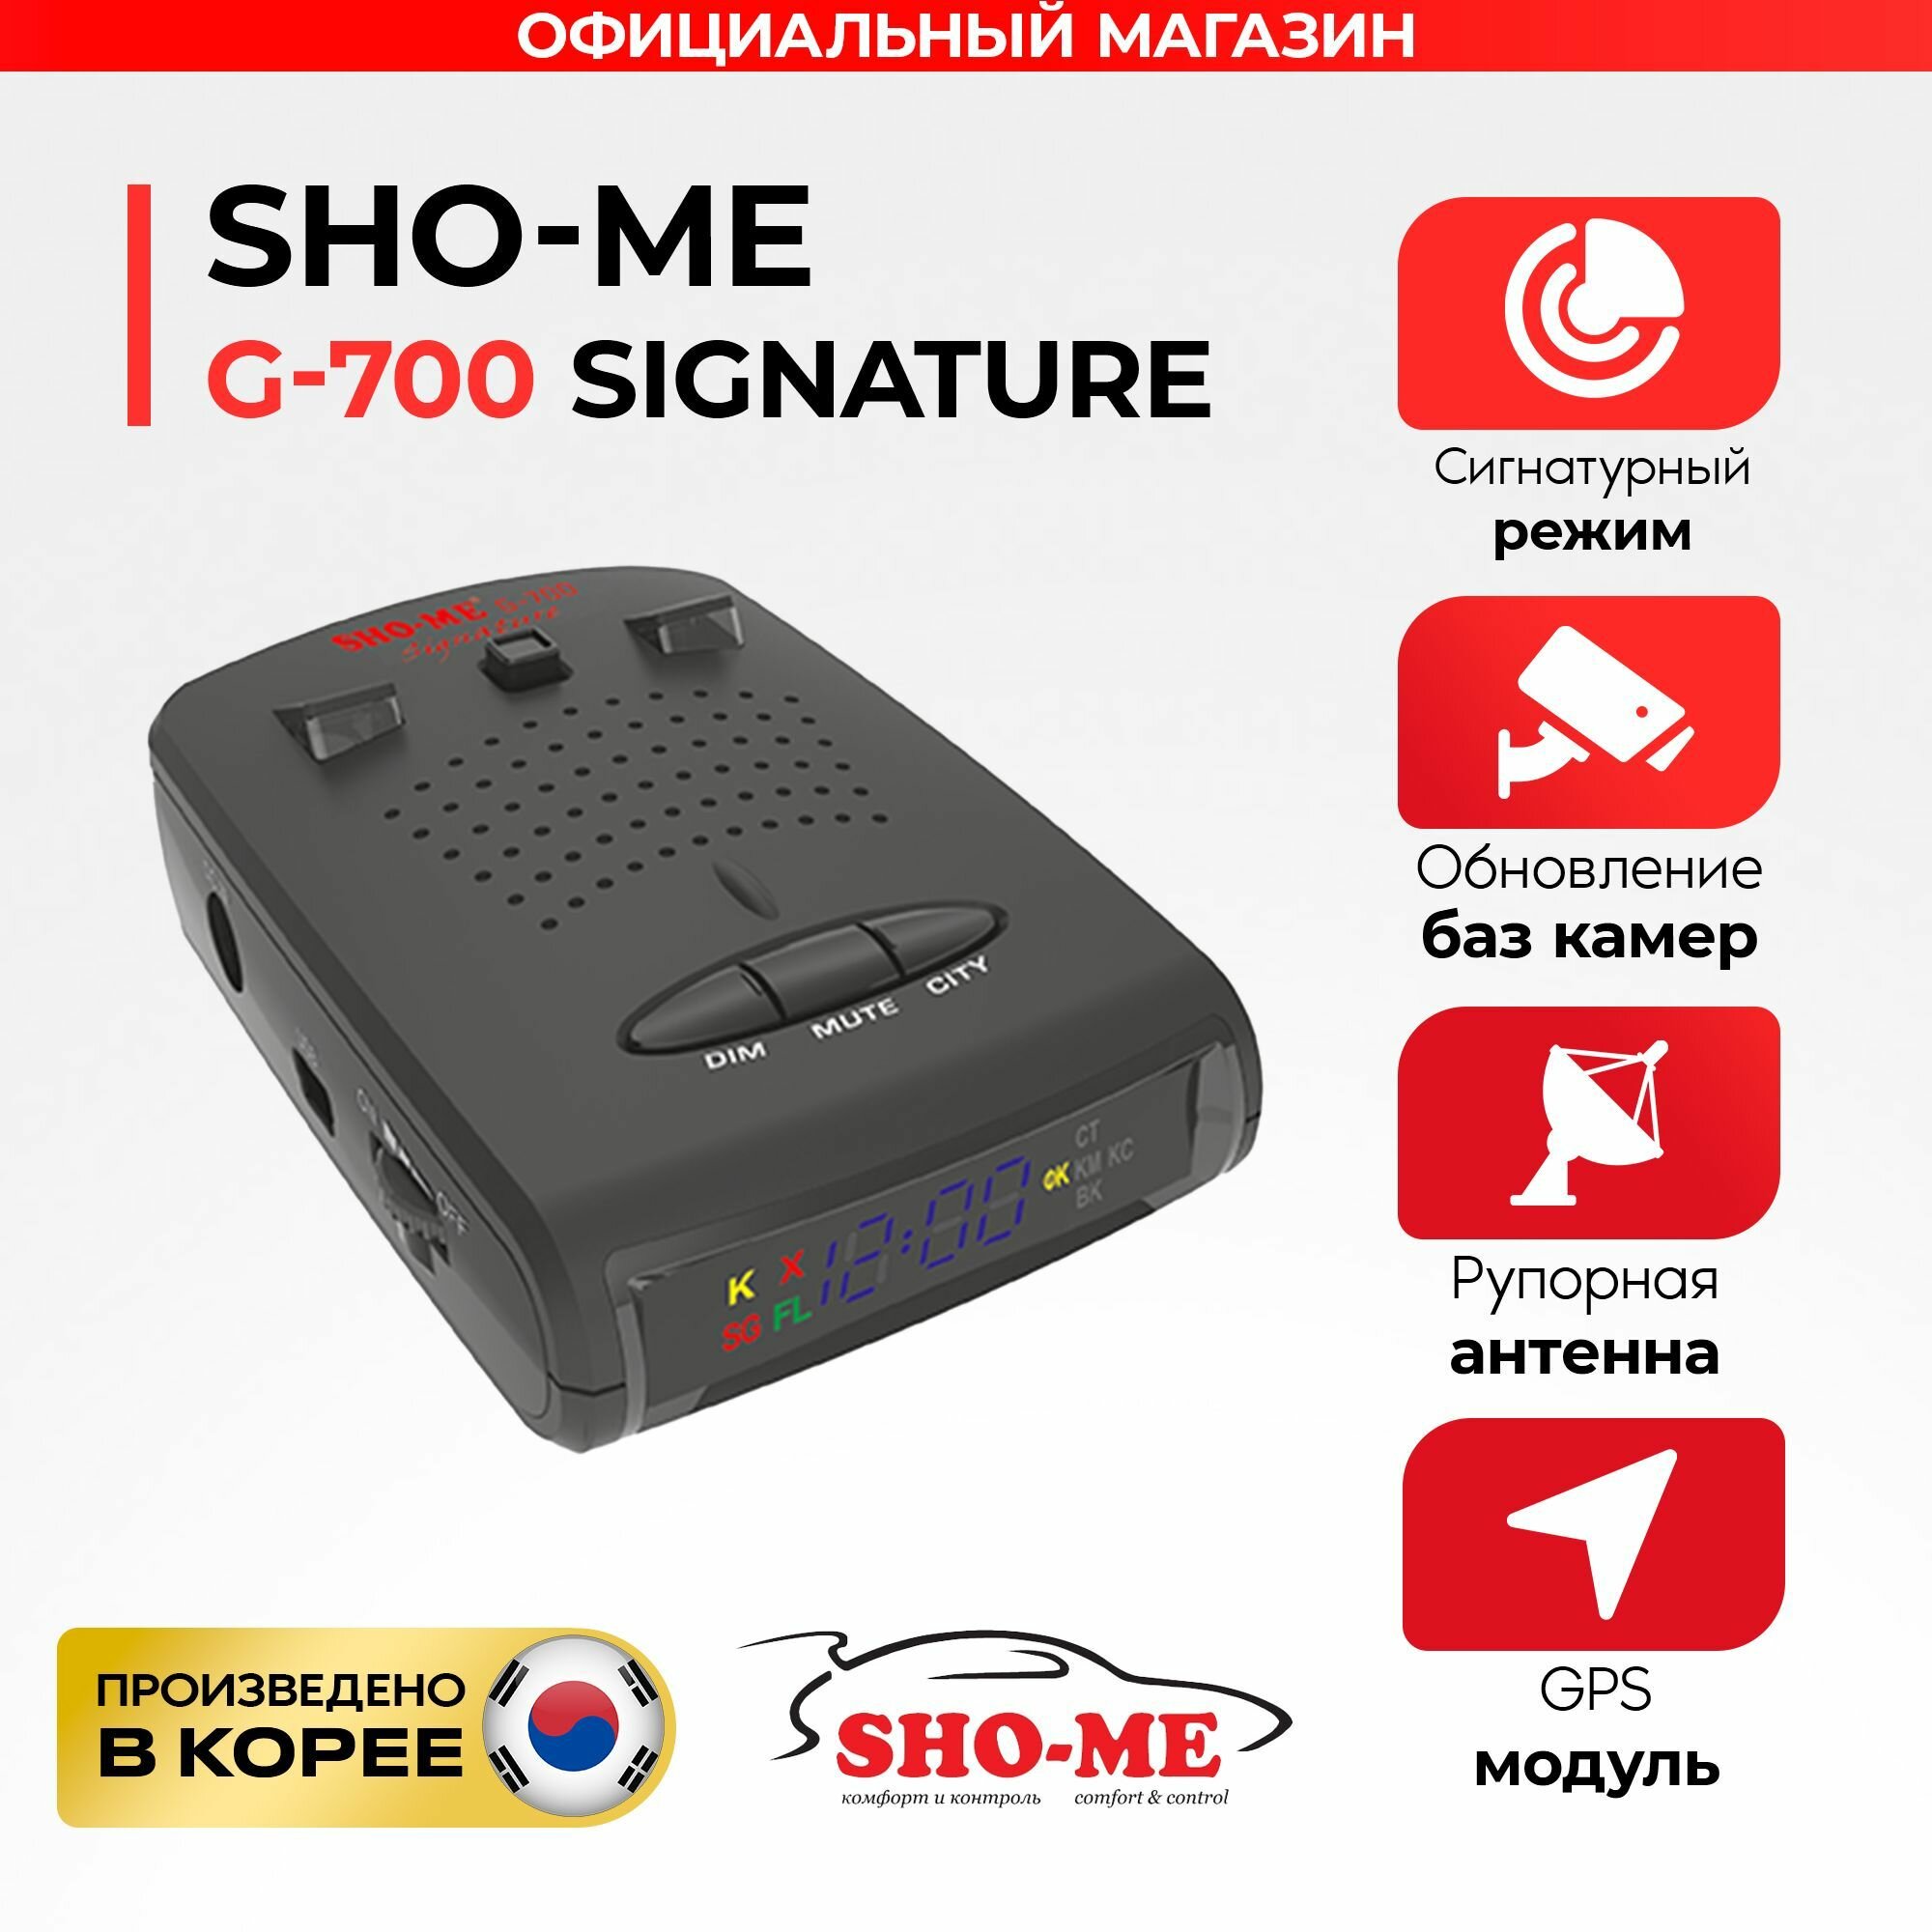 Сигнатурный радар-детектор Sho-Me G-700 Signature с GPS модулем